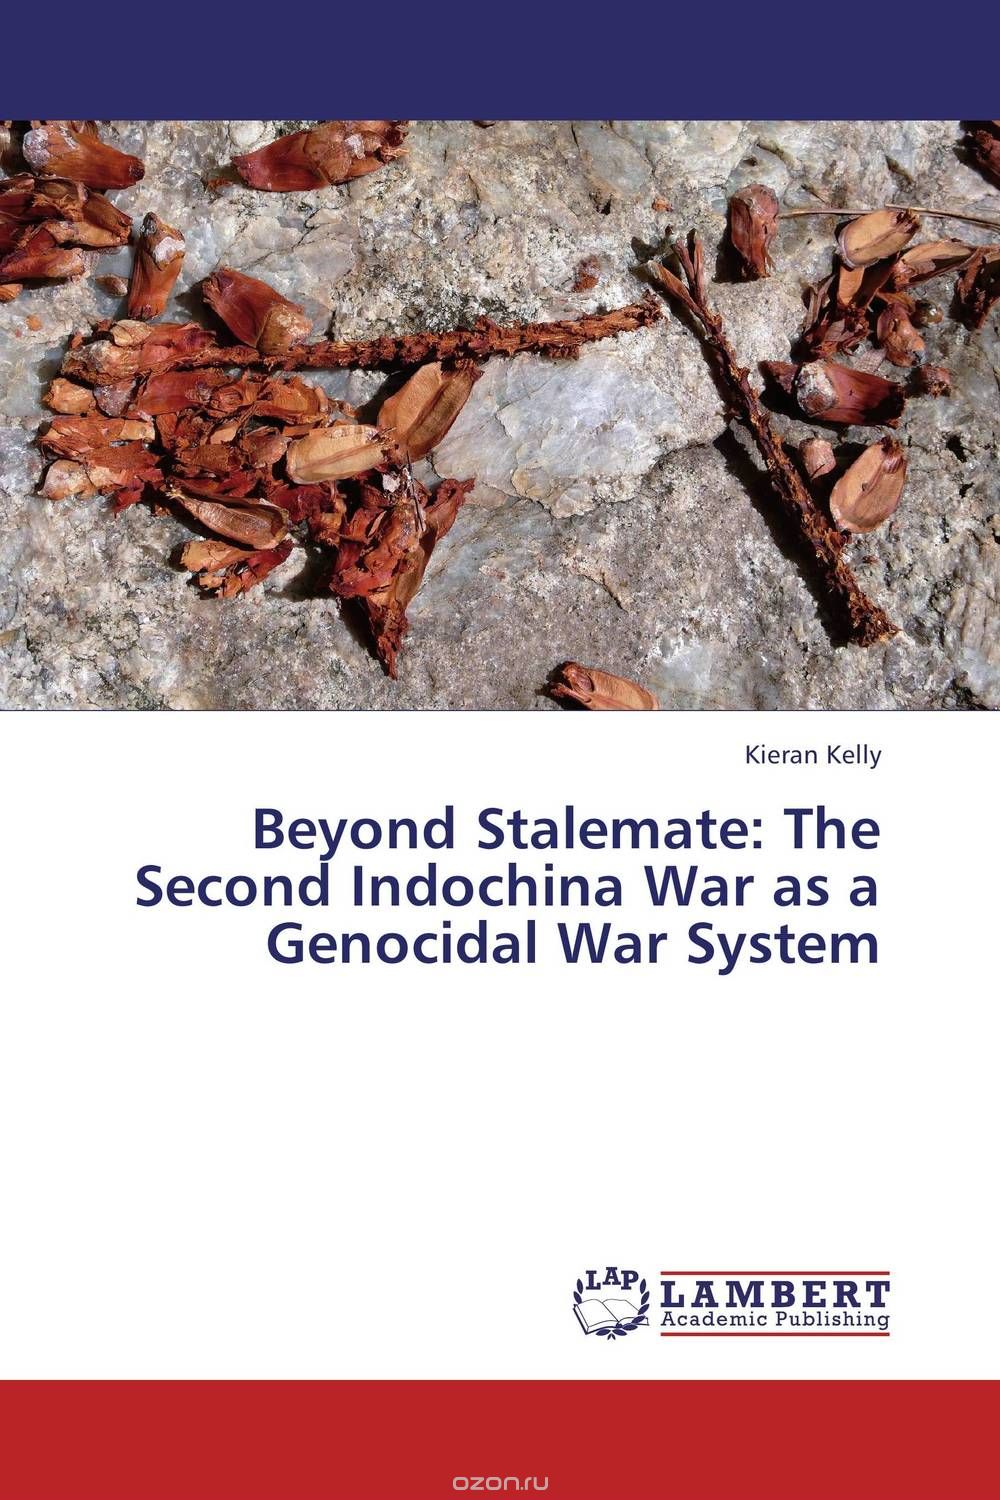 Скачать книгу "Beyond Stalemate: The Second Indochina War as a Genocidal War System"